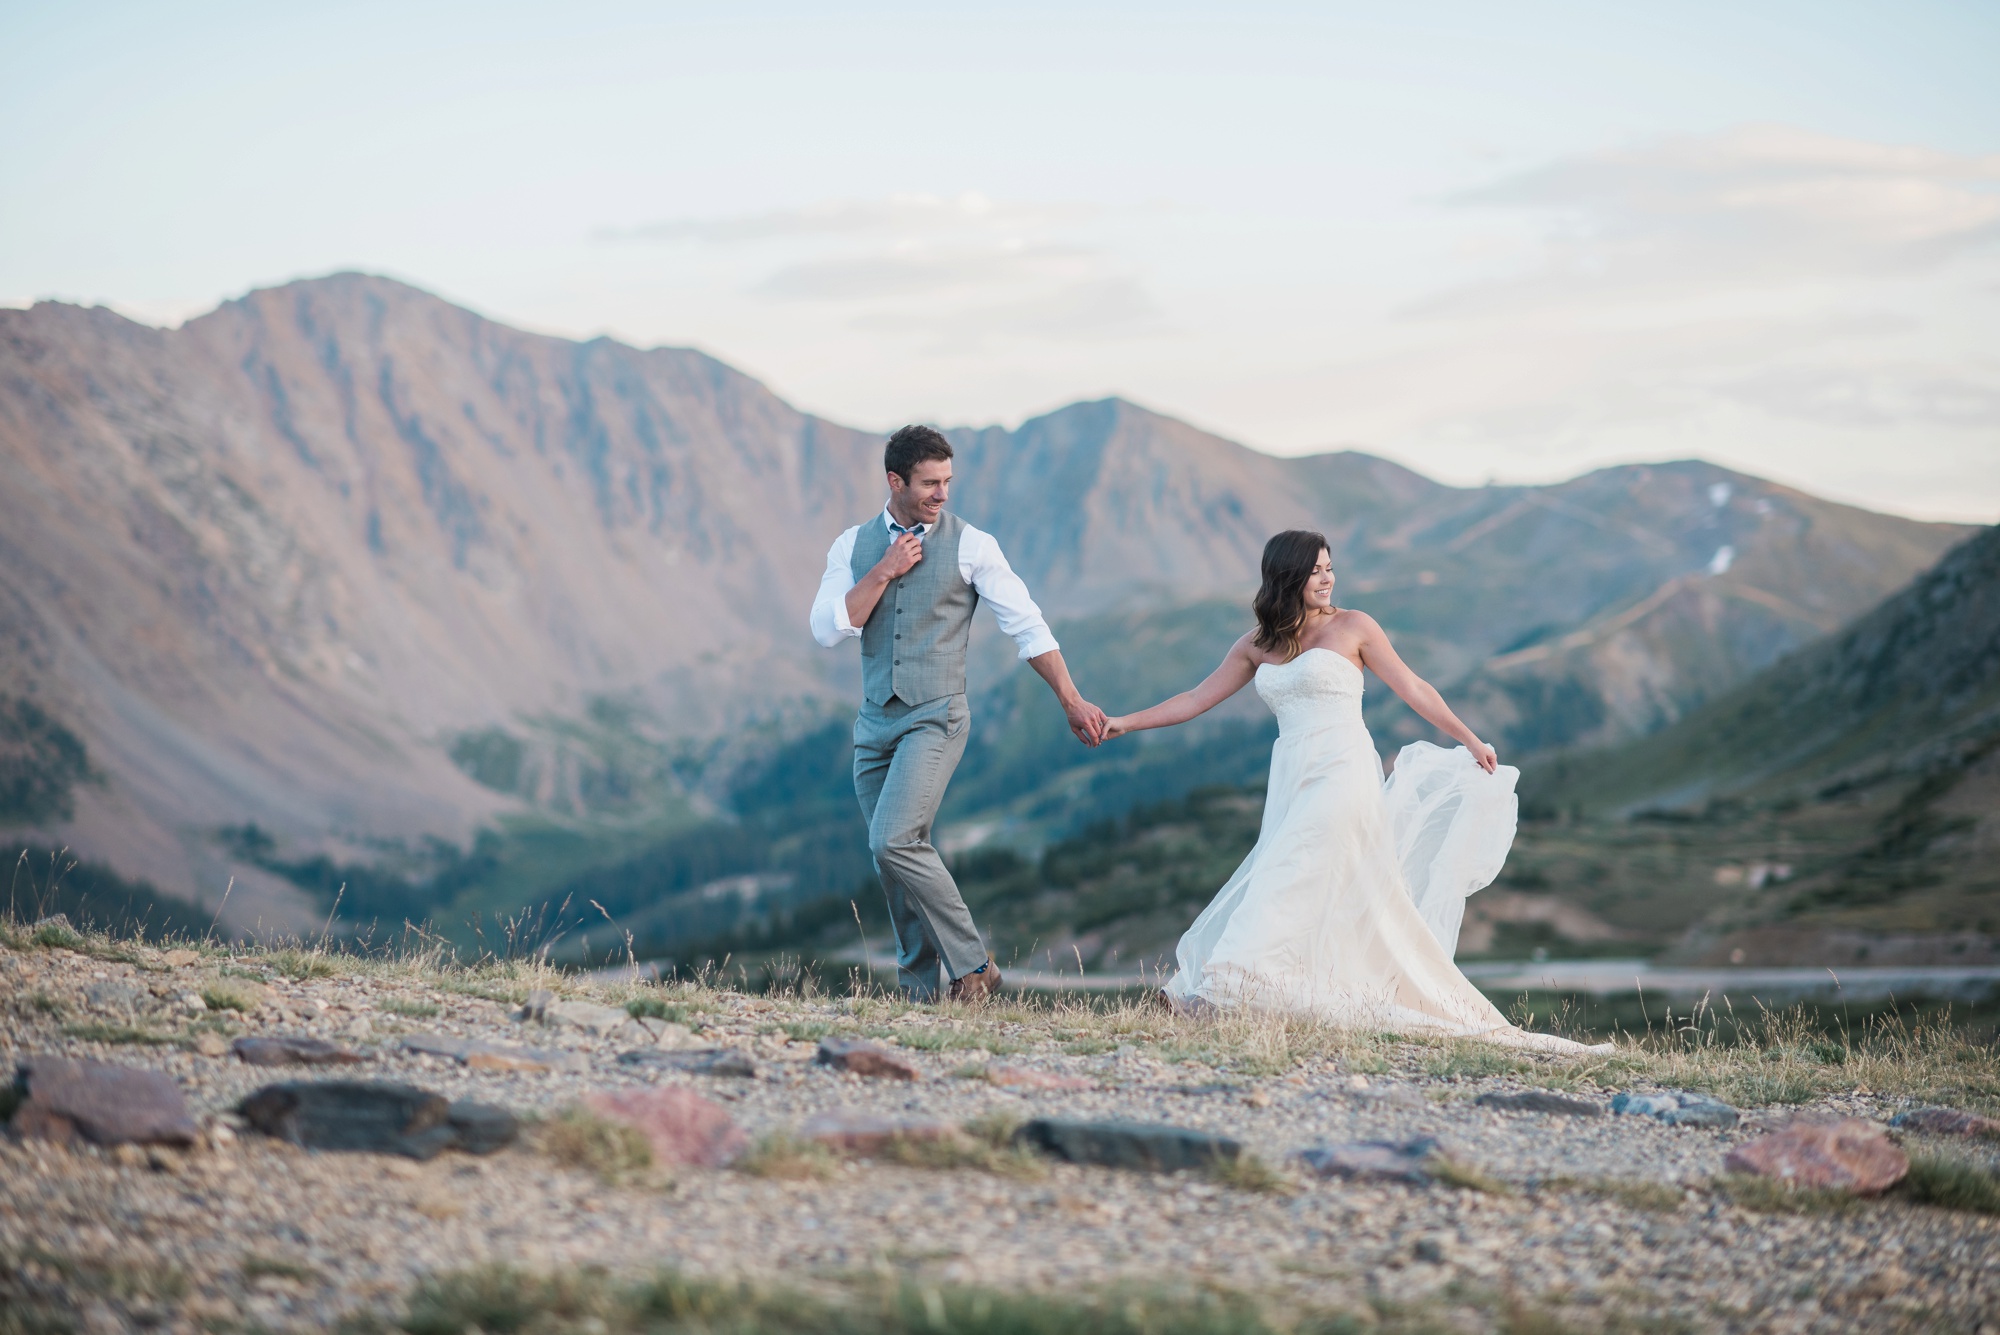 Walking along a ridge line among Colorado Rocky Mountains after their wedding 